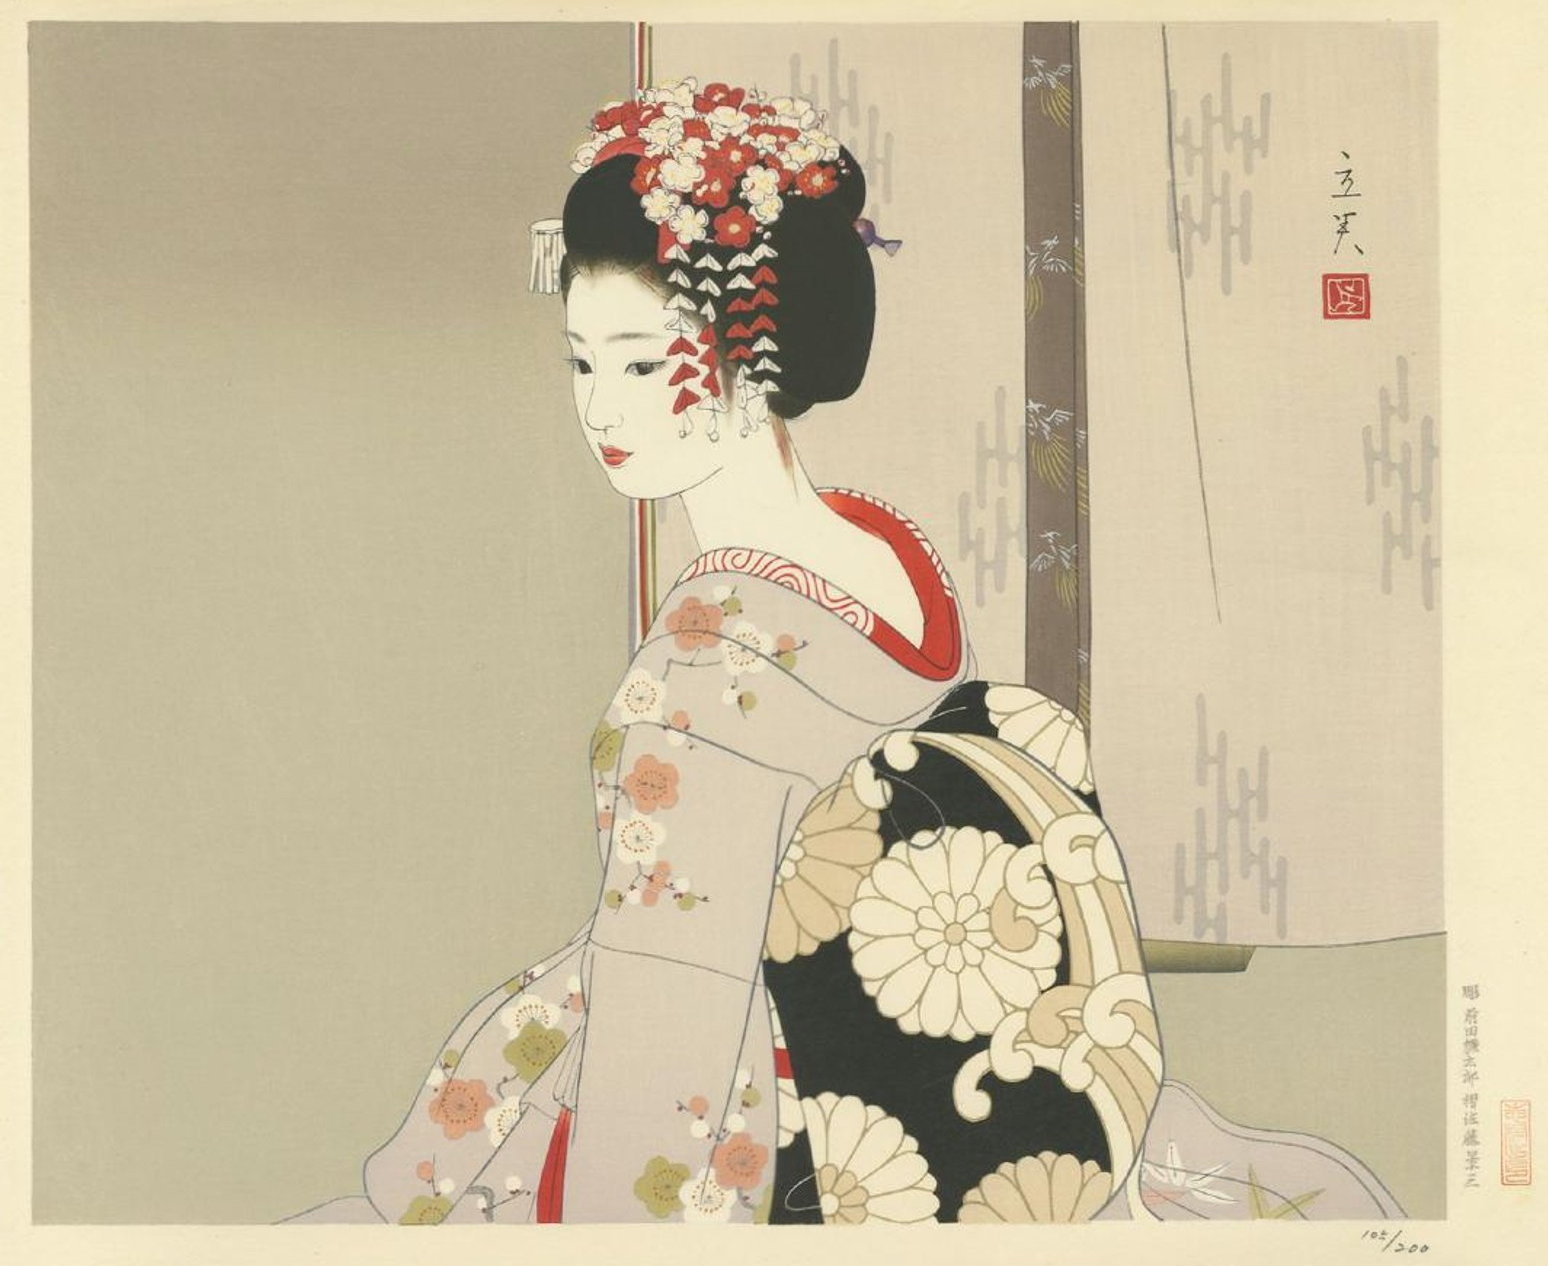 Shimura Tatsumi “Maiko (Apprentice Geisha)” 1980 woodblock print